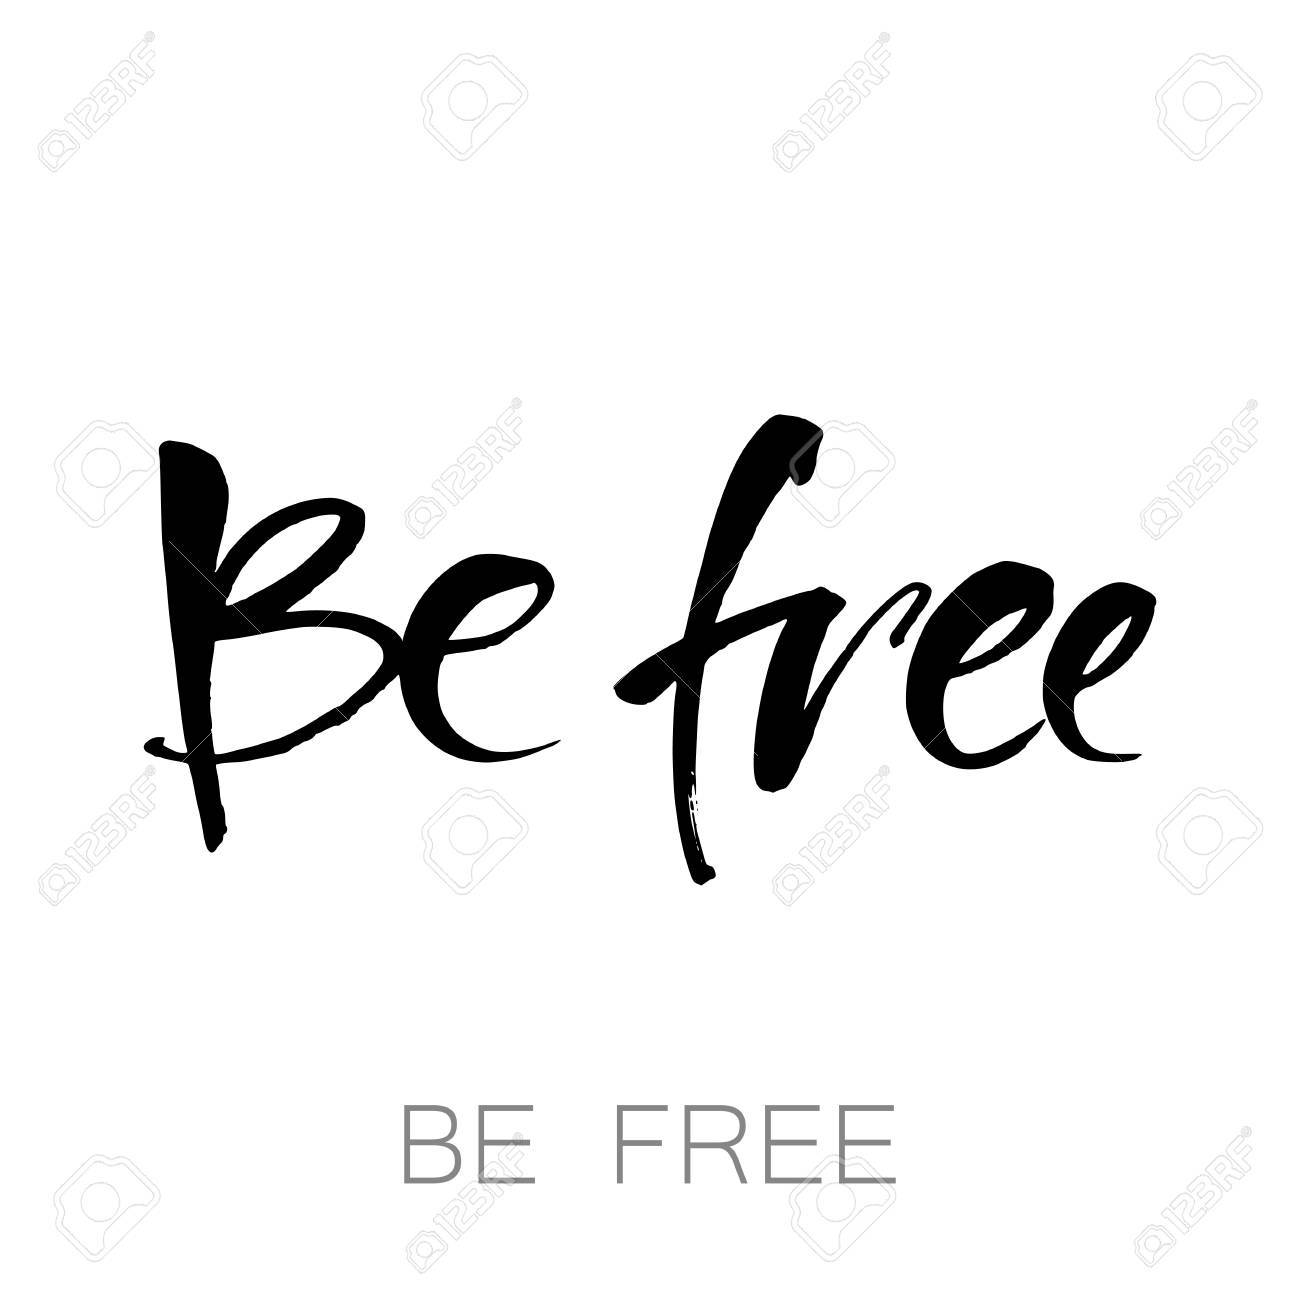 be free.jpg